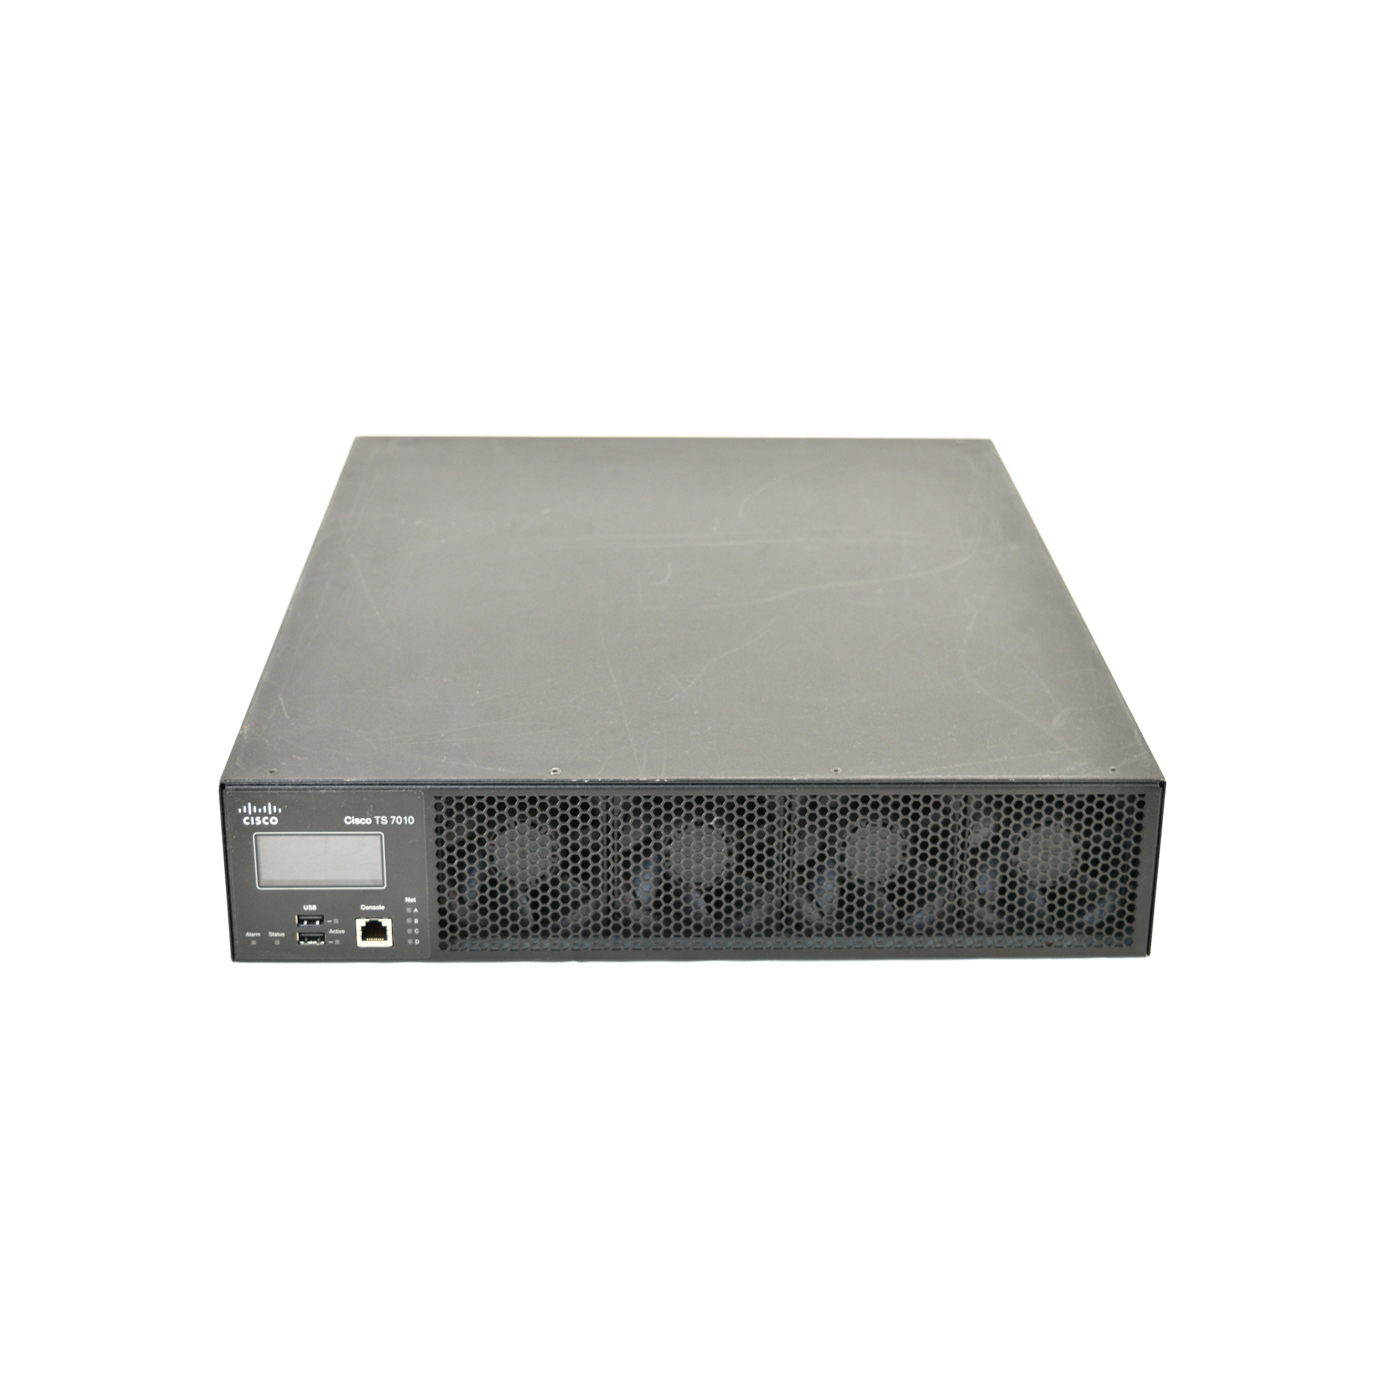 TelePresence Server on Multiparty Media 820 